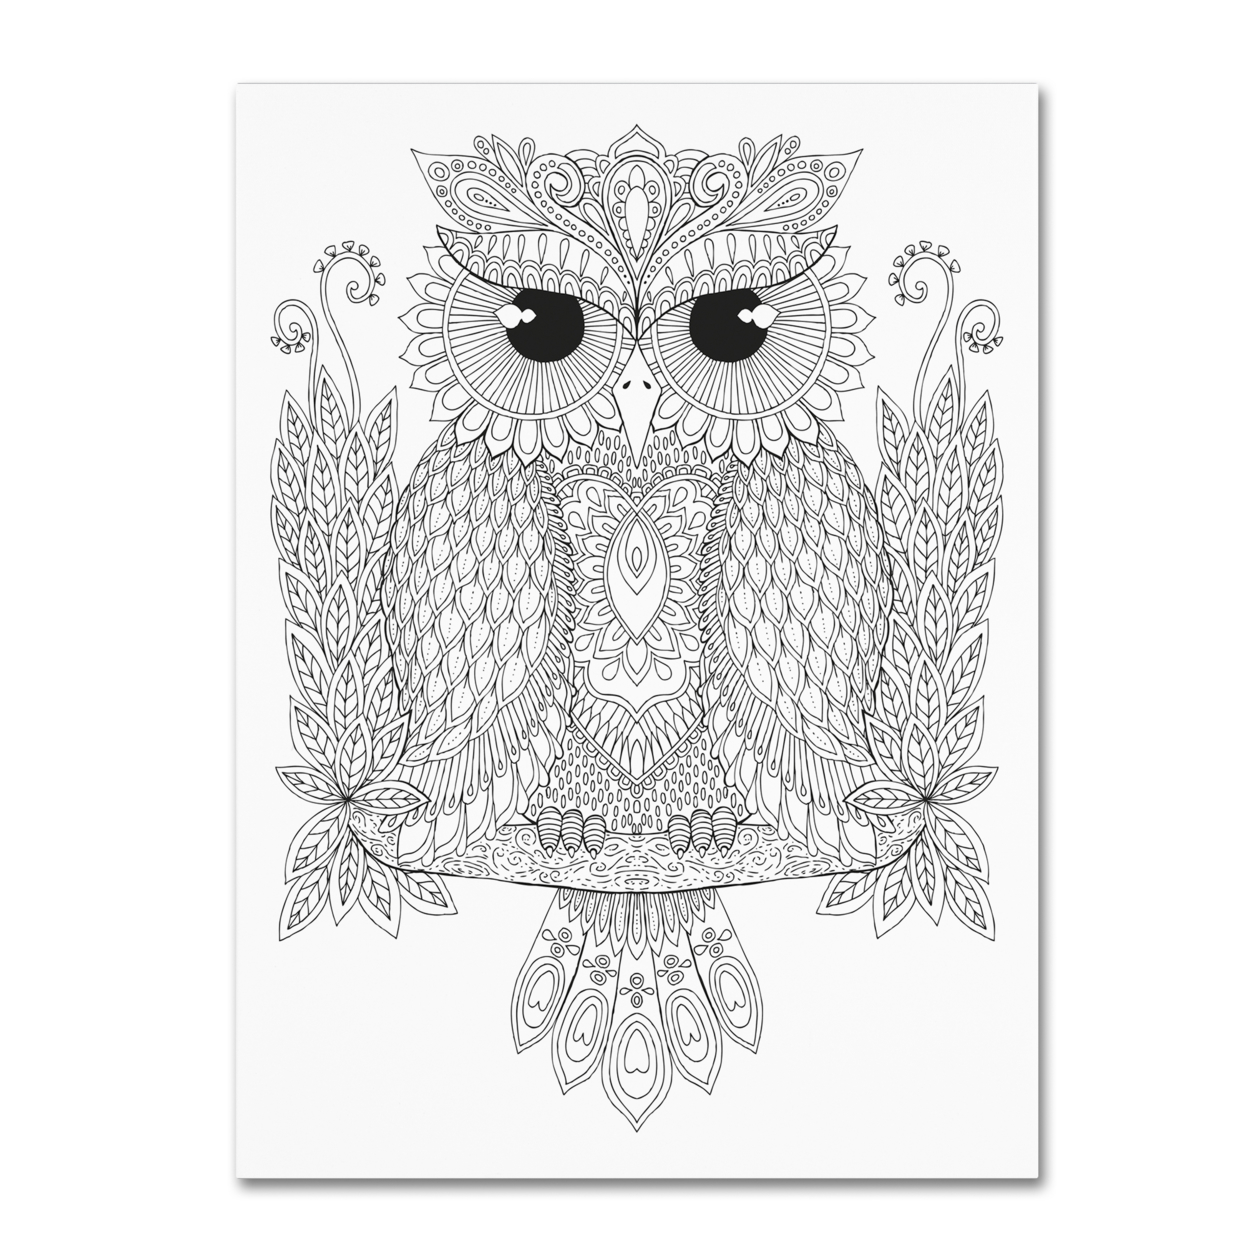 Hello Angel 'Night Owls 1' Canvas Wall Art 35 X 47 Inches